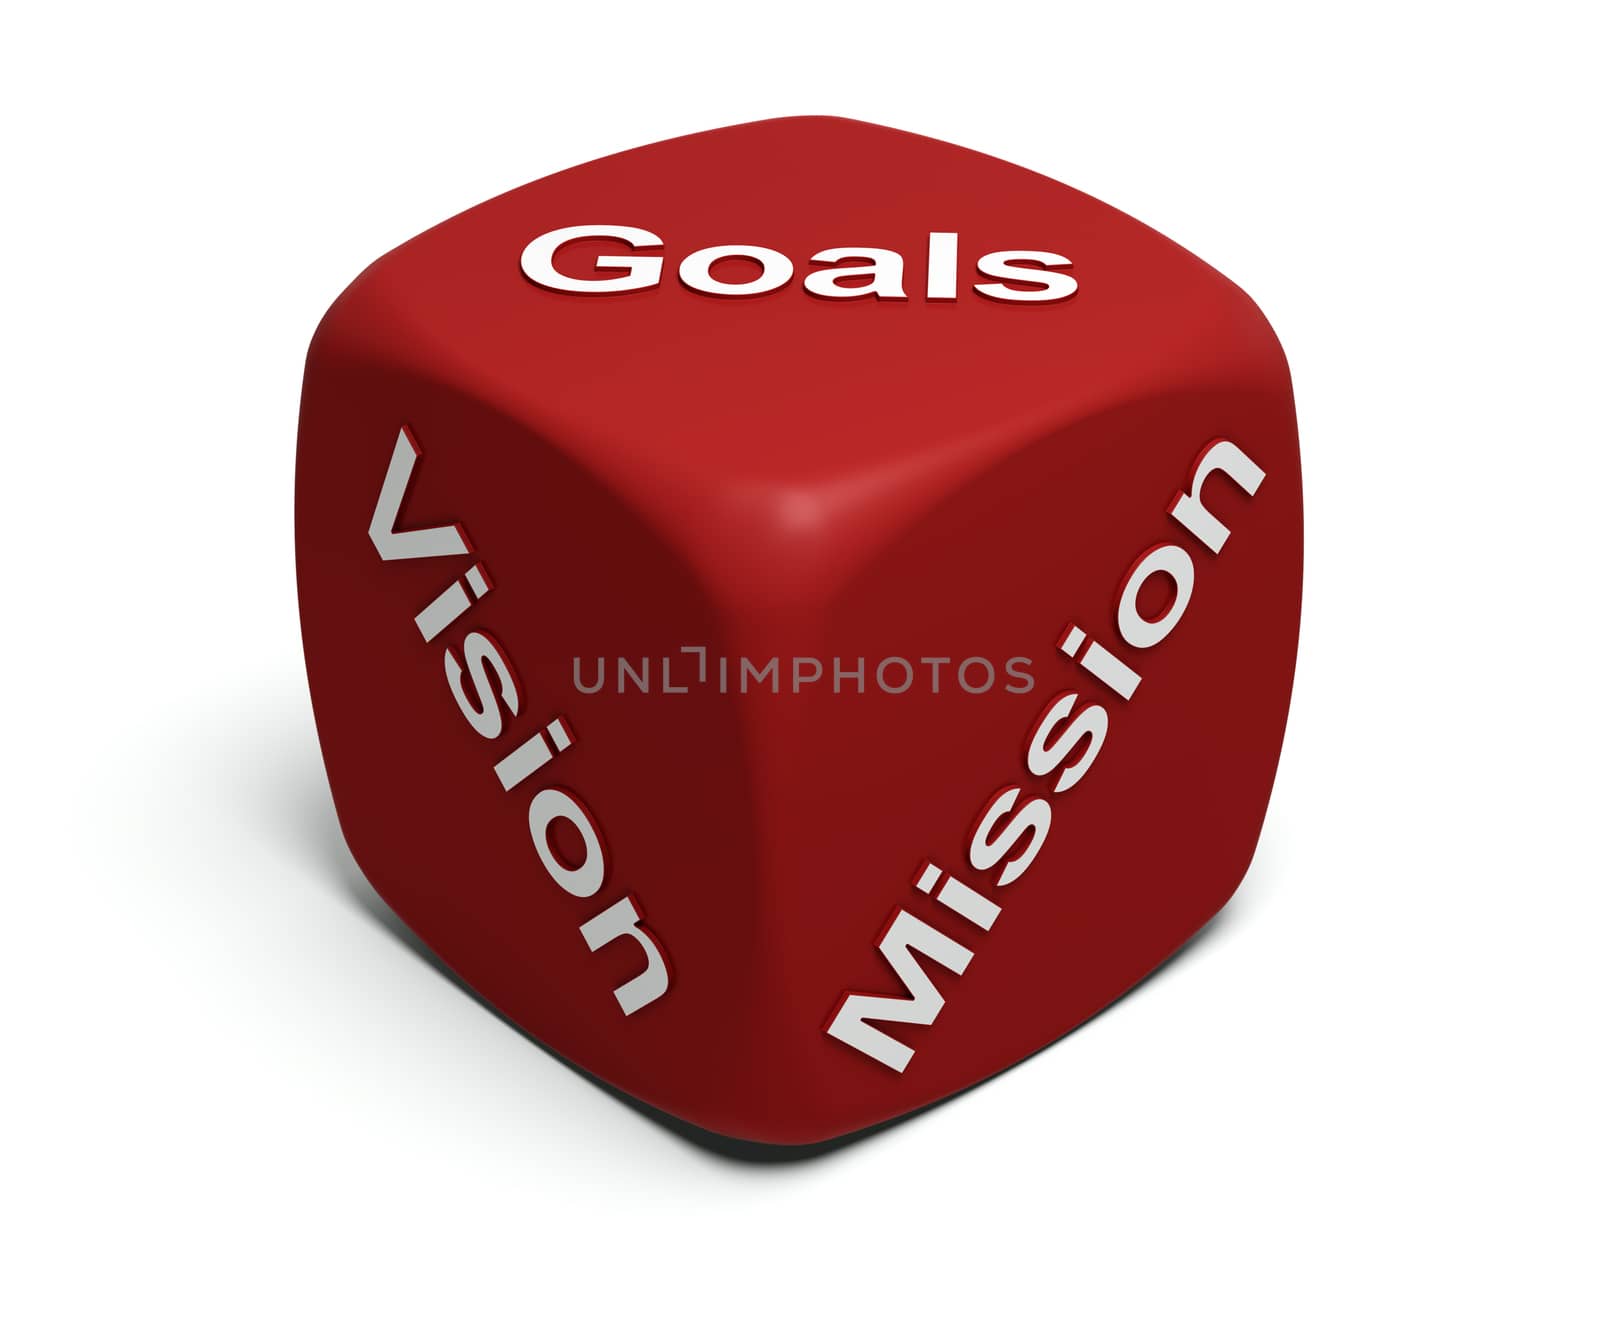 Vision, Mission, Goals by vkstudio